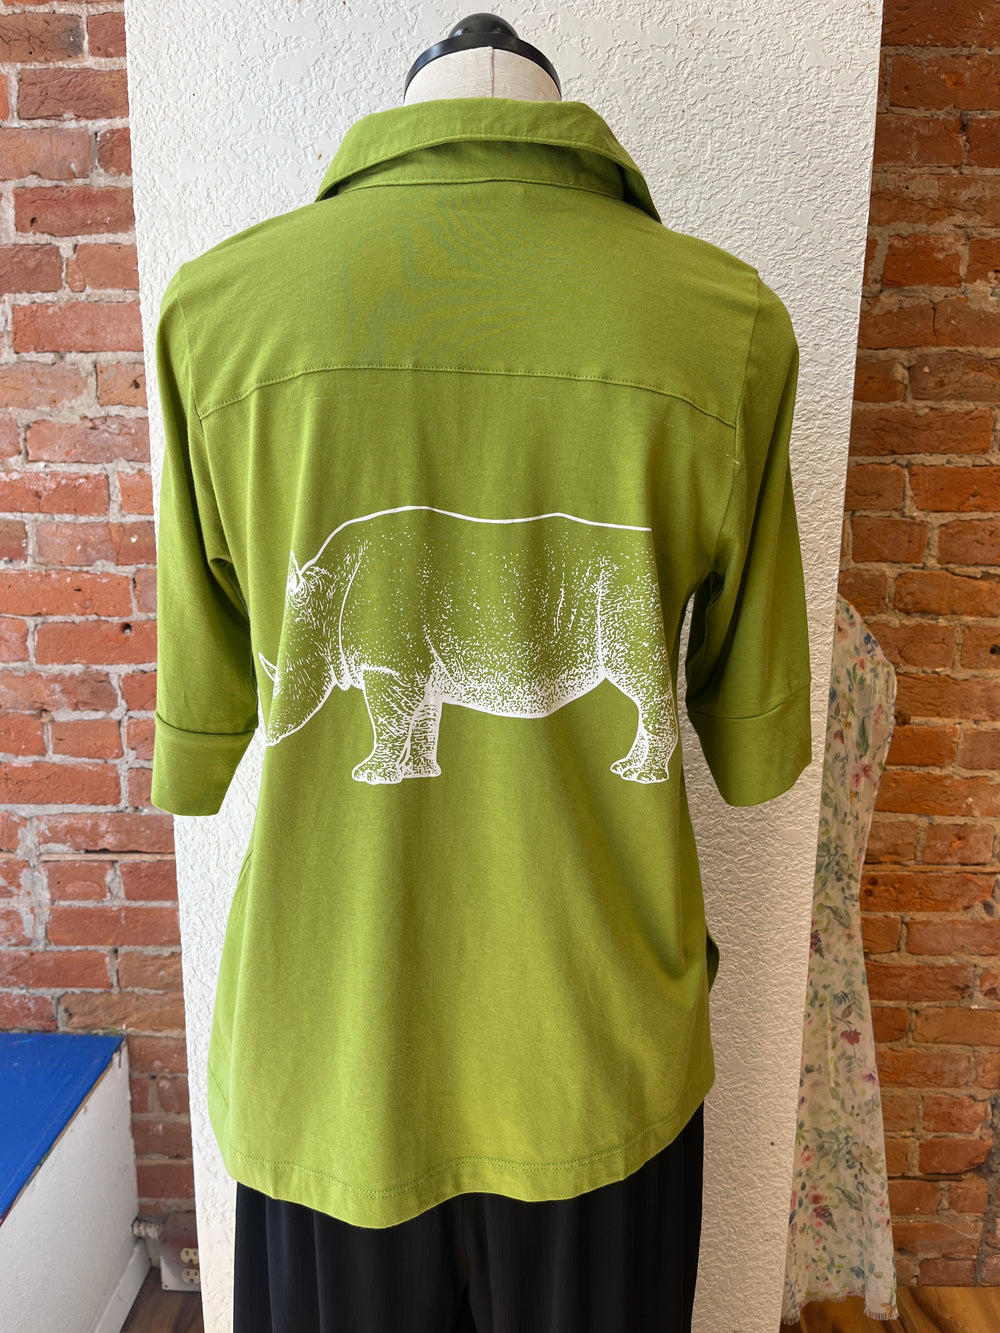 Flutter camp shirt, Rhino image